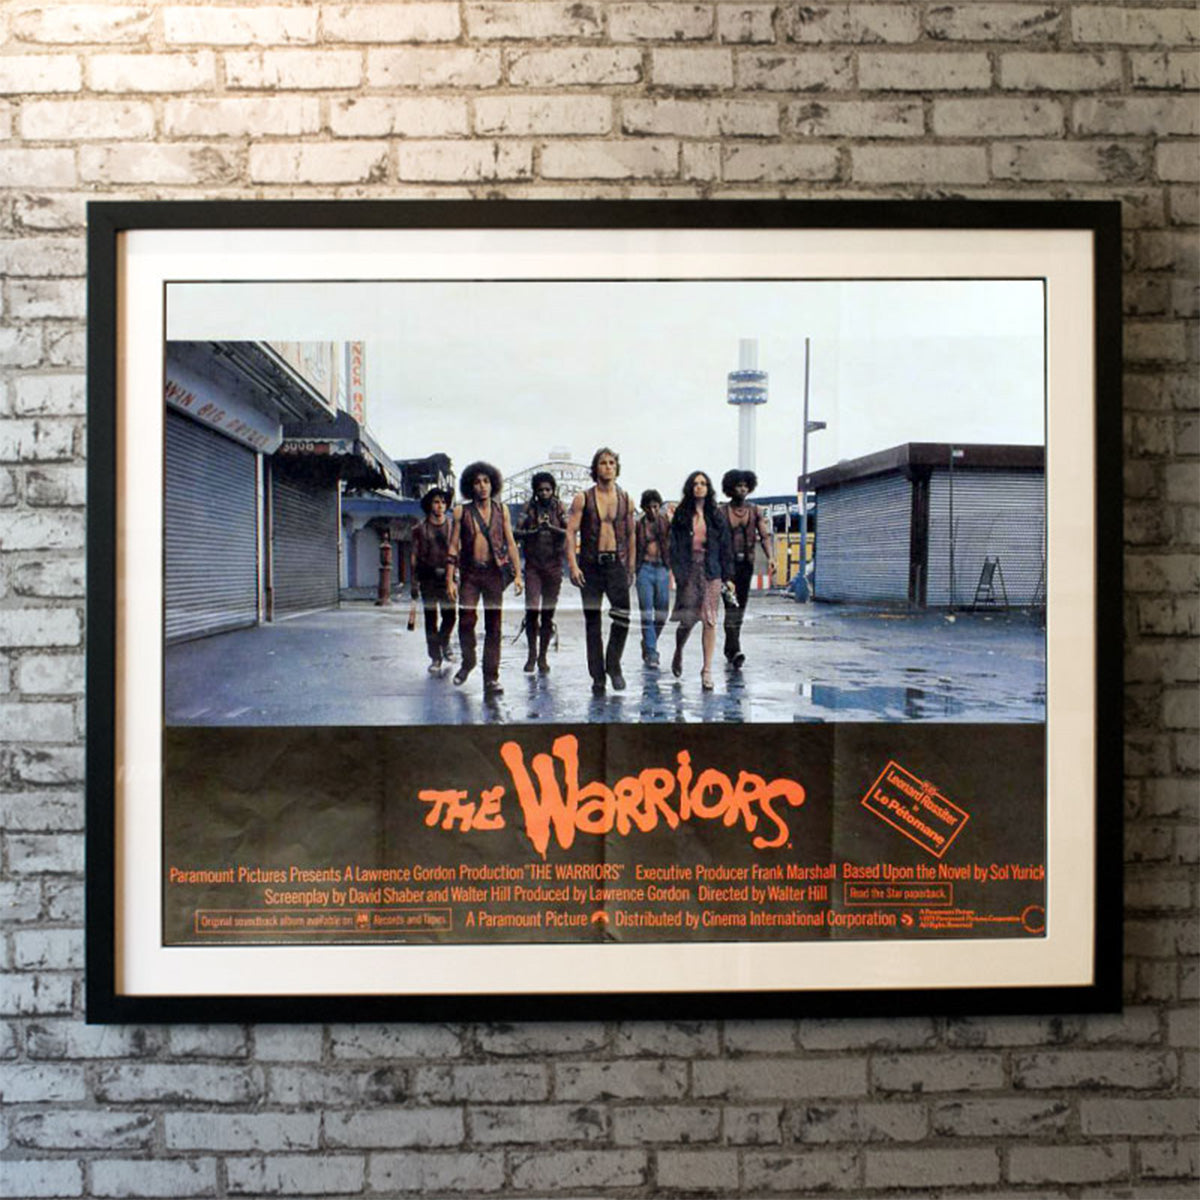 Original Movie Poster of Warriors, The (1979)